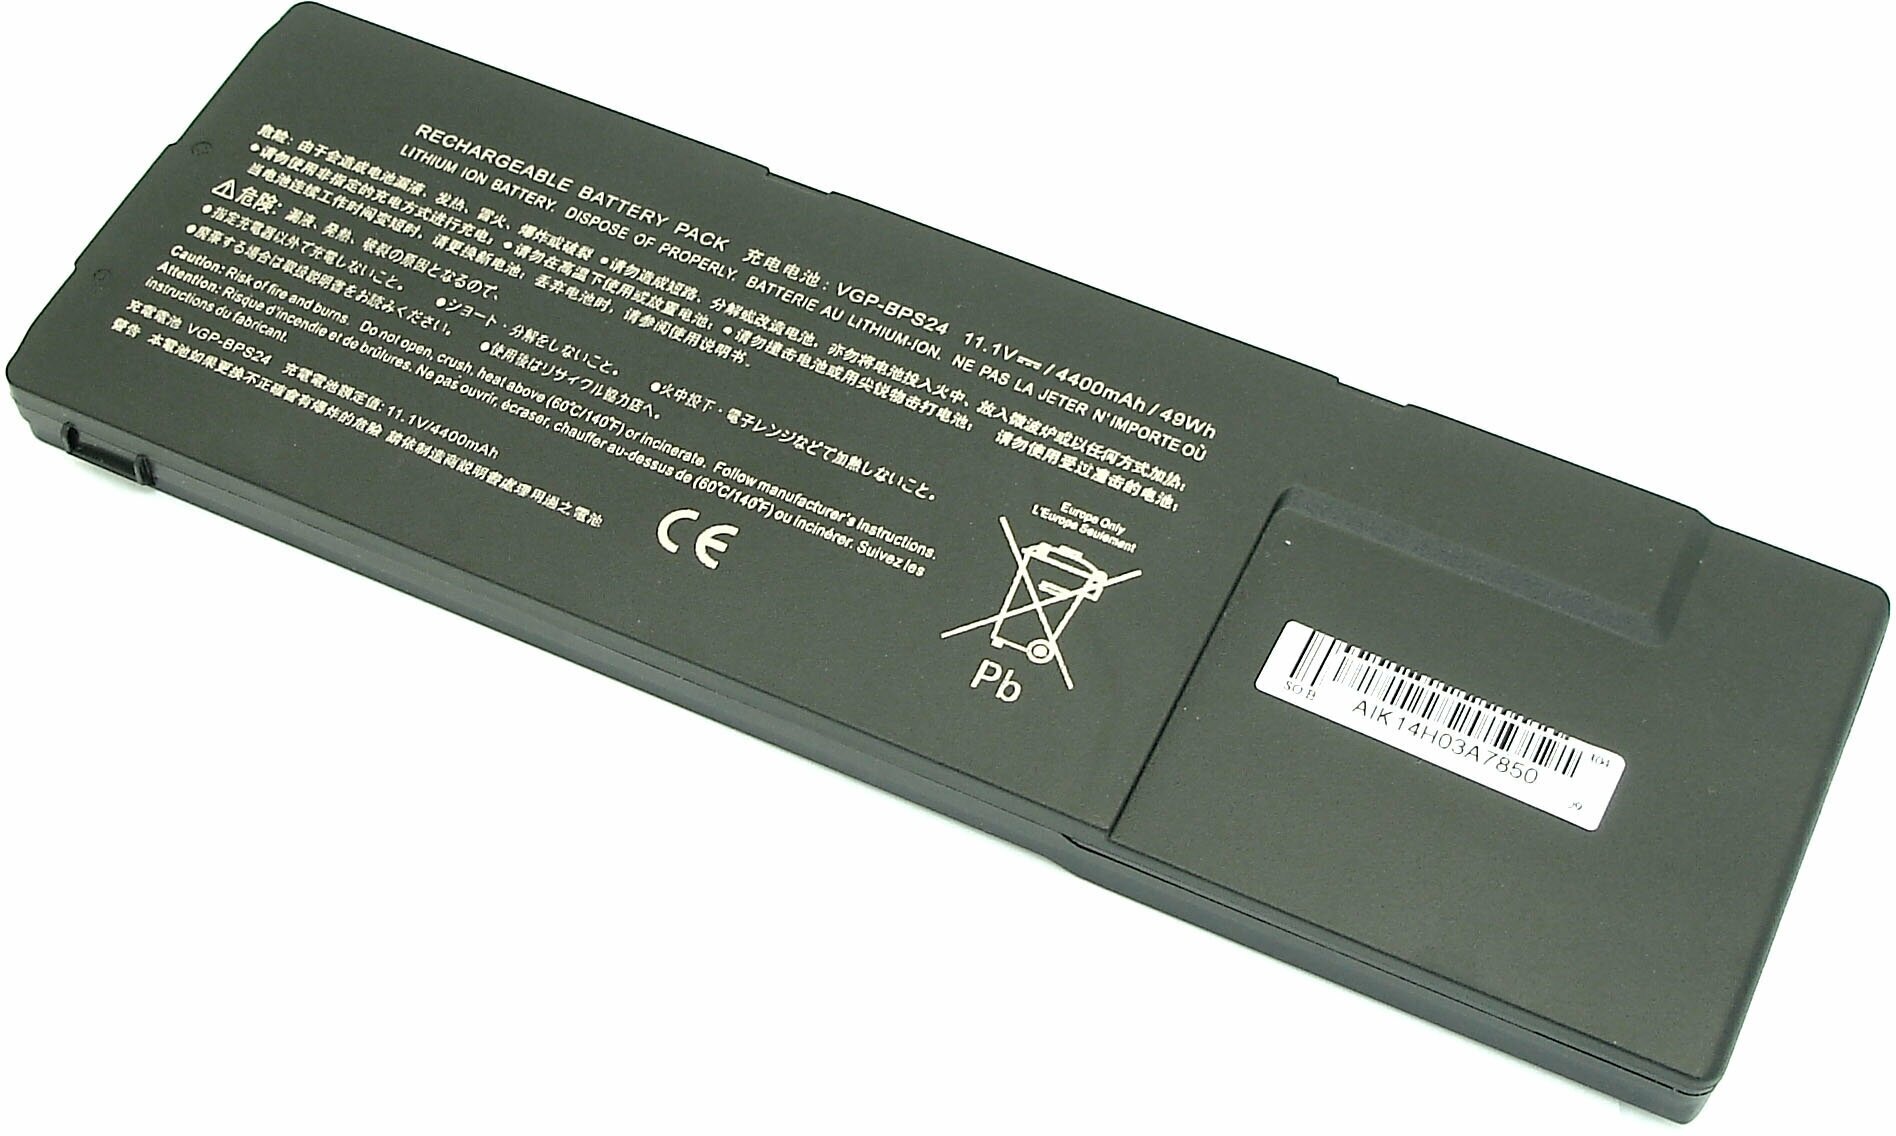 Аккумуляторная батарея для ноутбука Sony VPC-SA, VPC-SB, VPC-SE, VPC-SD, SV-S (VGP-BPS24) 4400mAh OEM черная